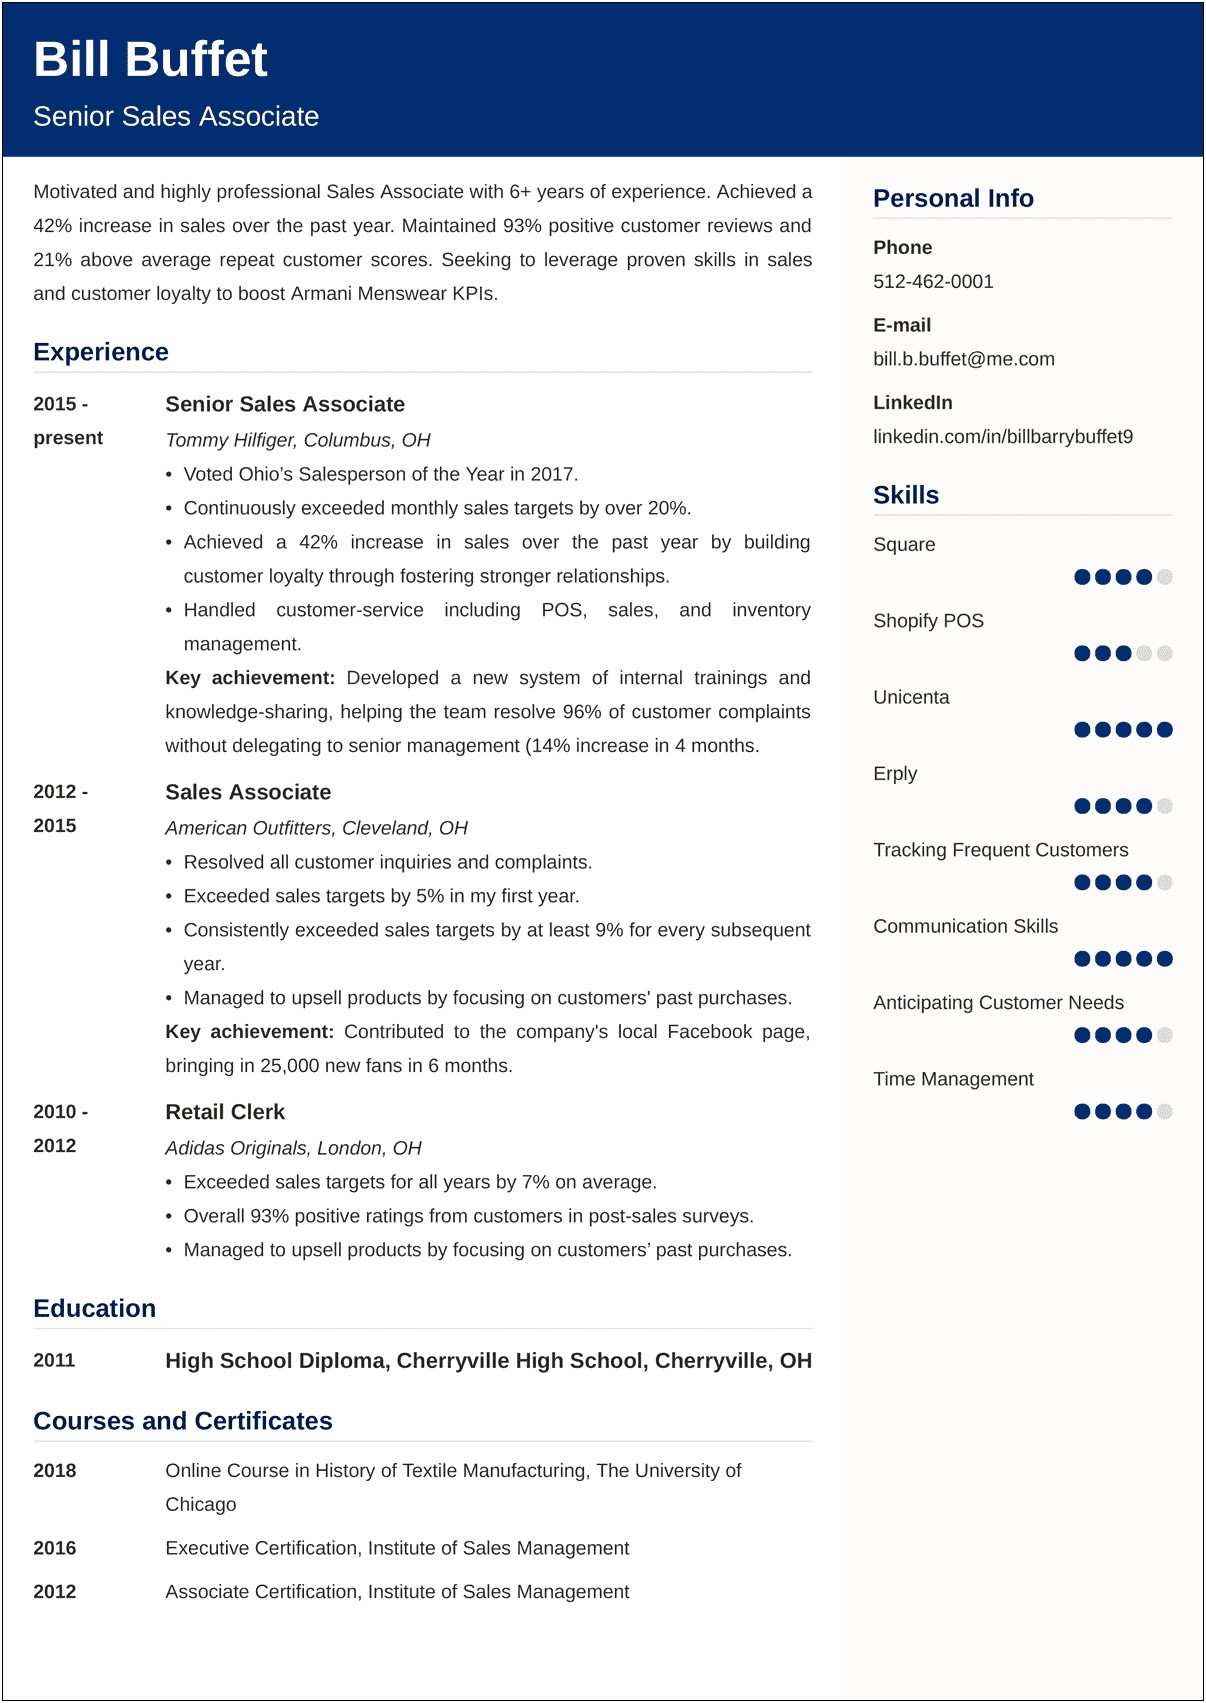 Job Description Retail Sales Associate Resume